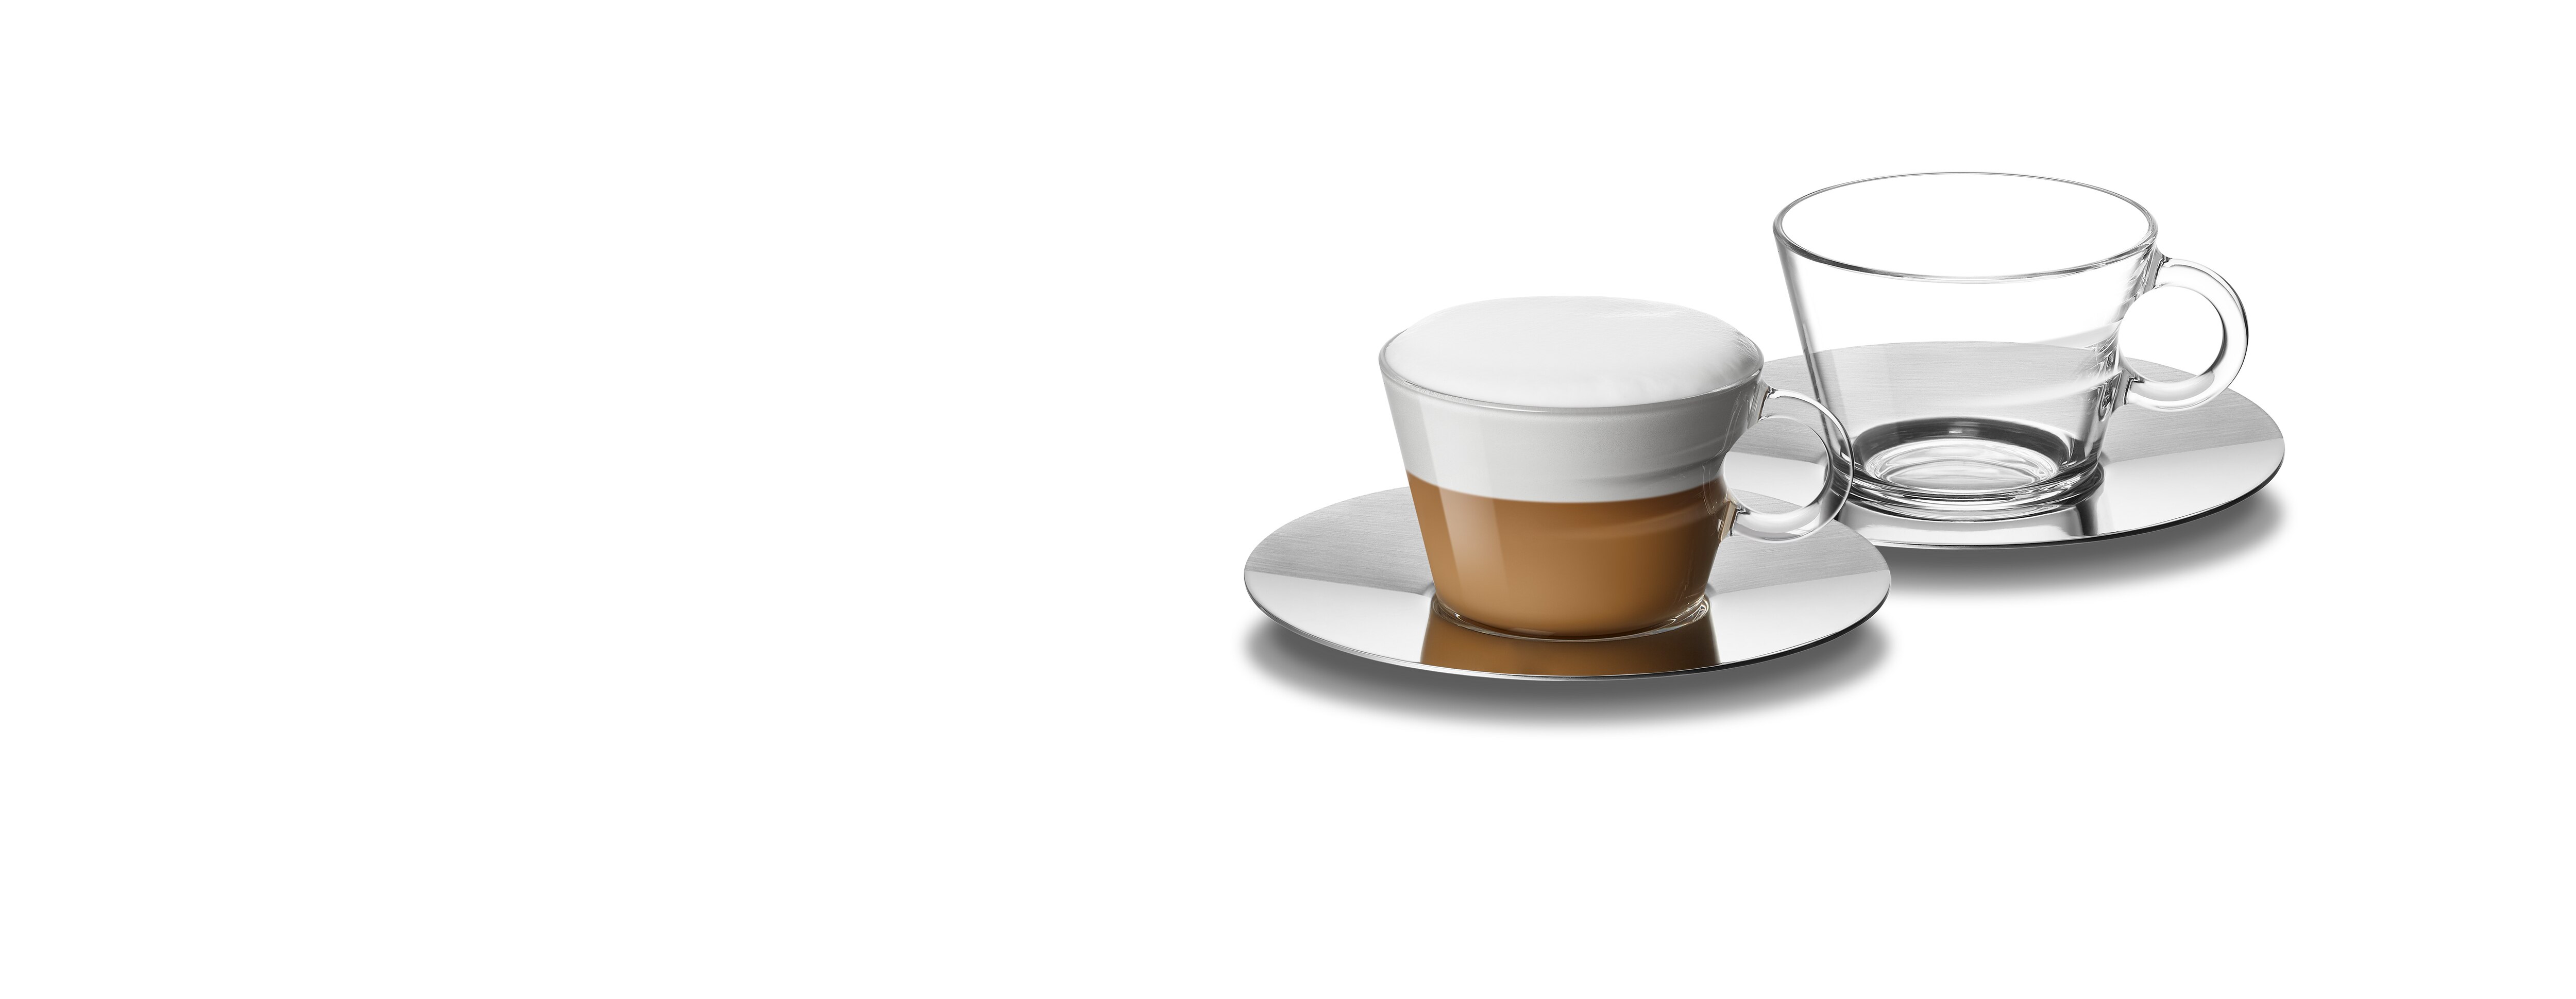 2 Nespresso View Collection Mugs Americano Coffee Latte Cappuccino Glass  Cup Set